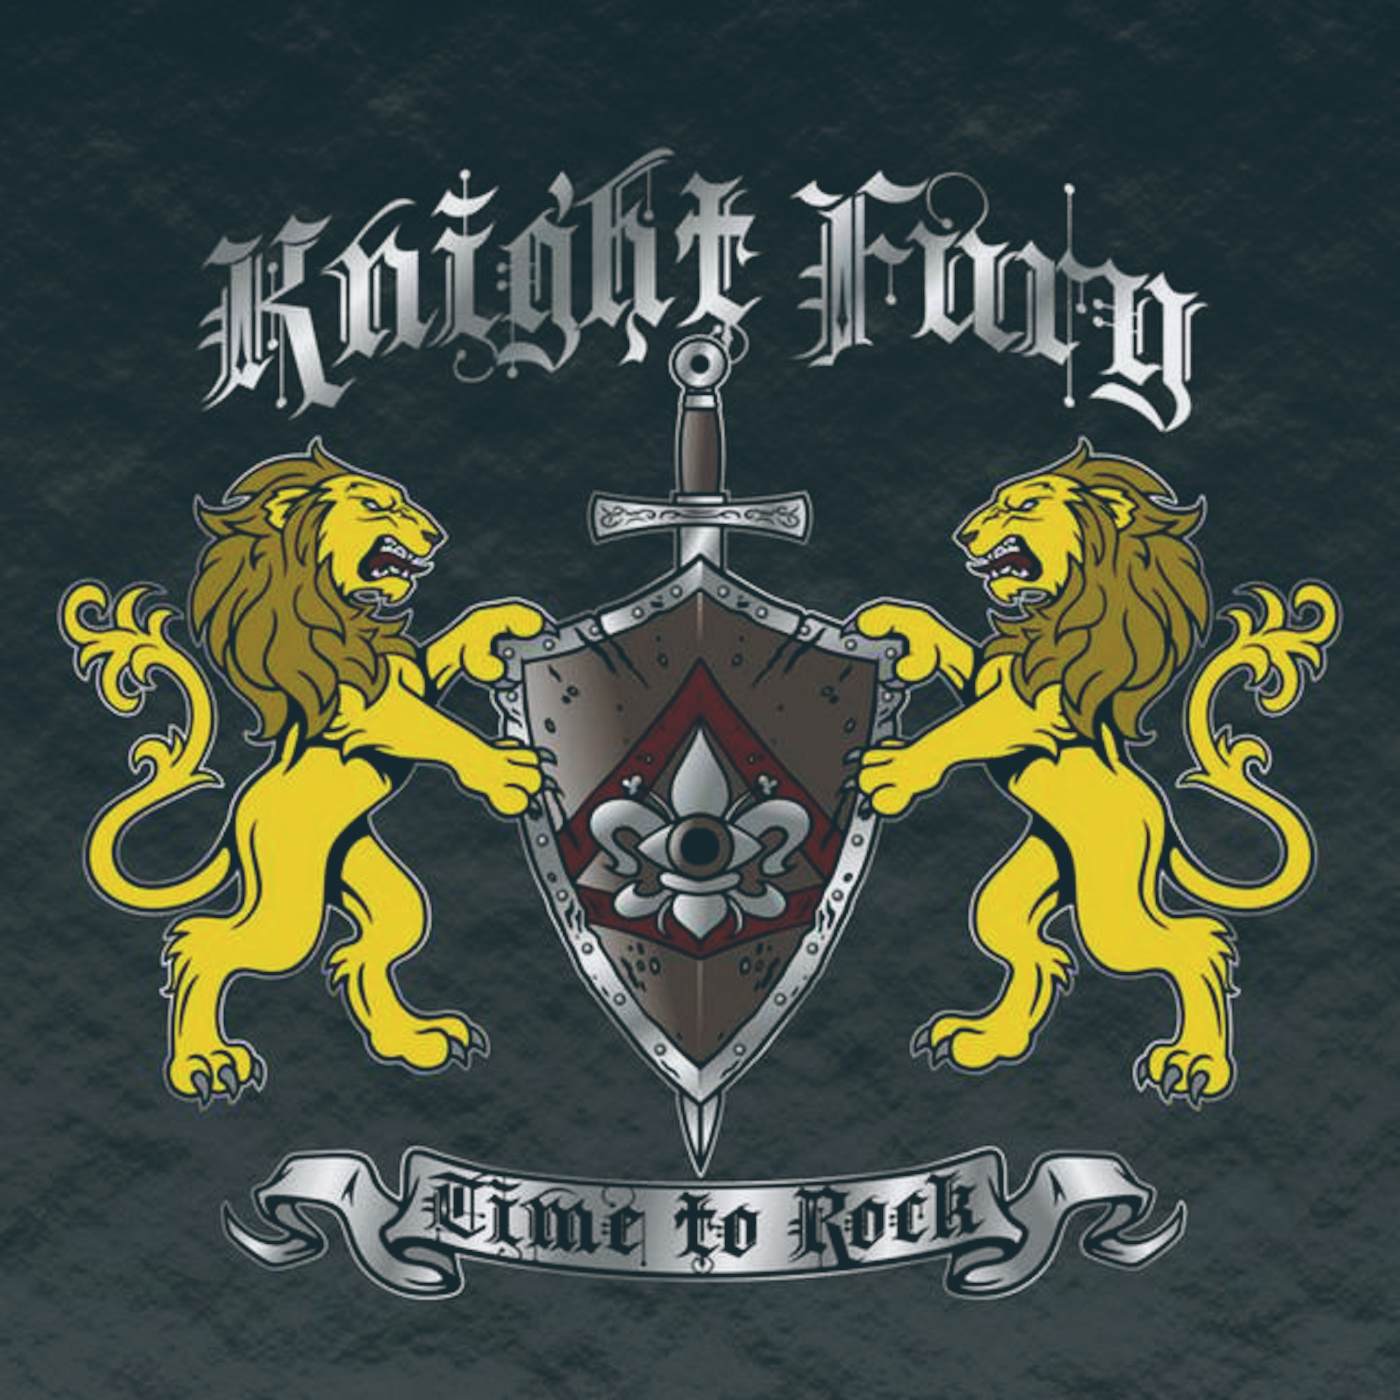 Knight Fury